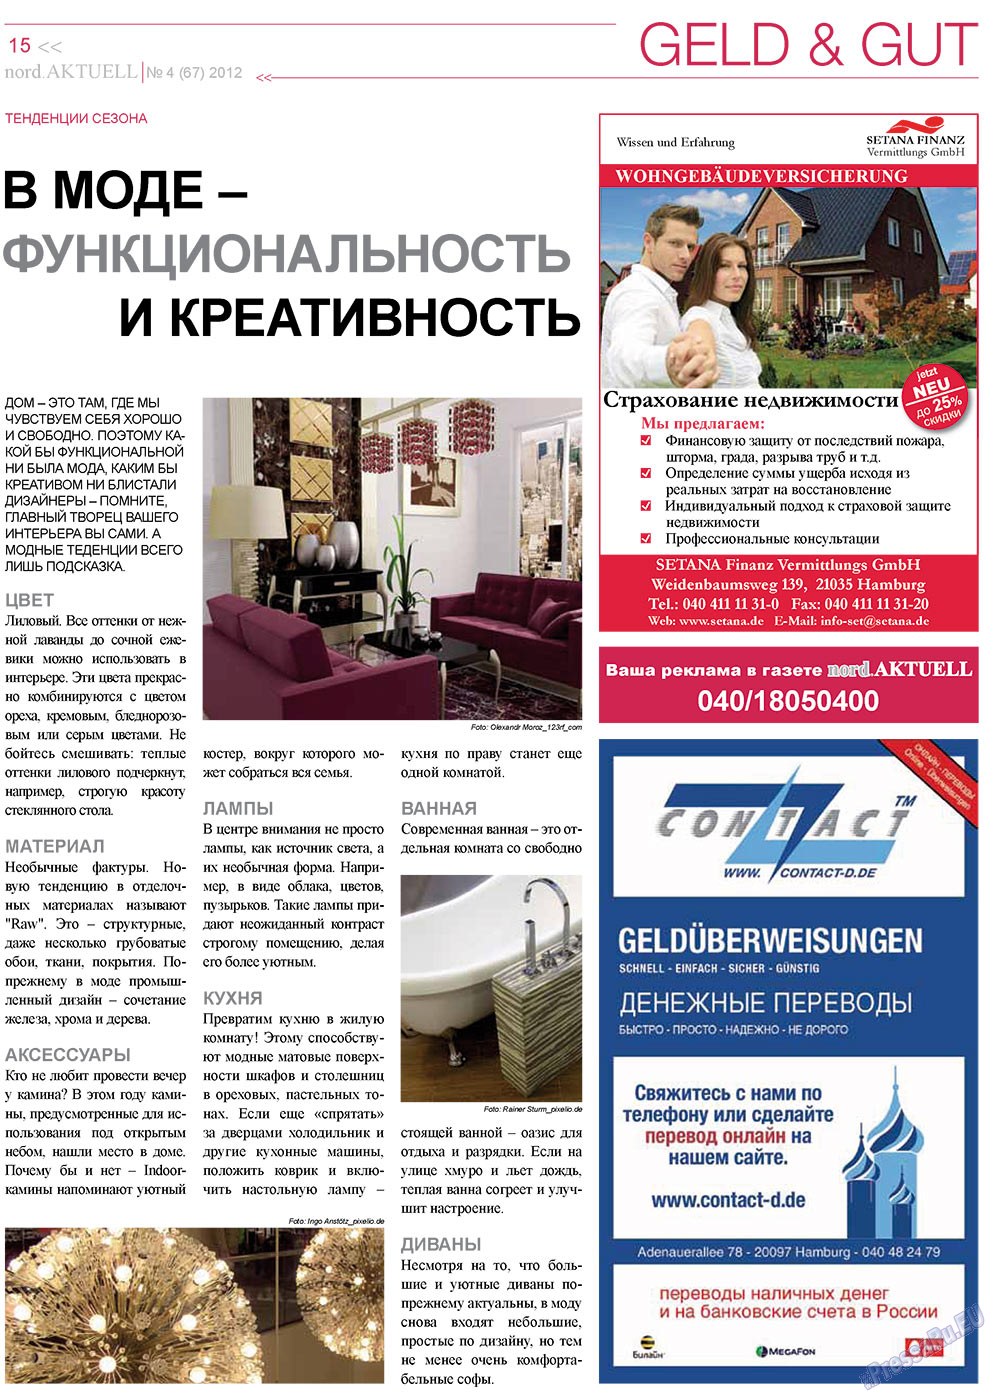 nord.Aktuell, газета. 2012 №4 стр.15